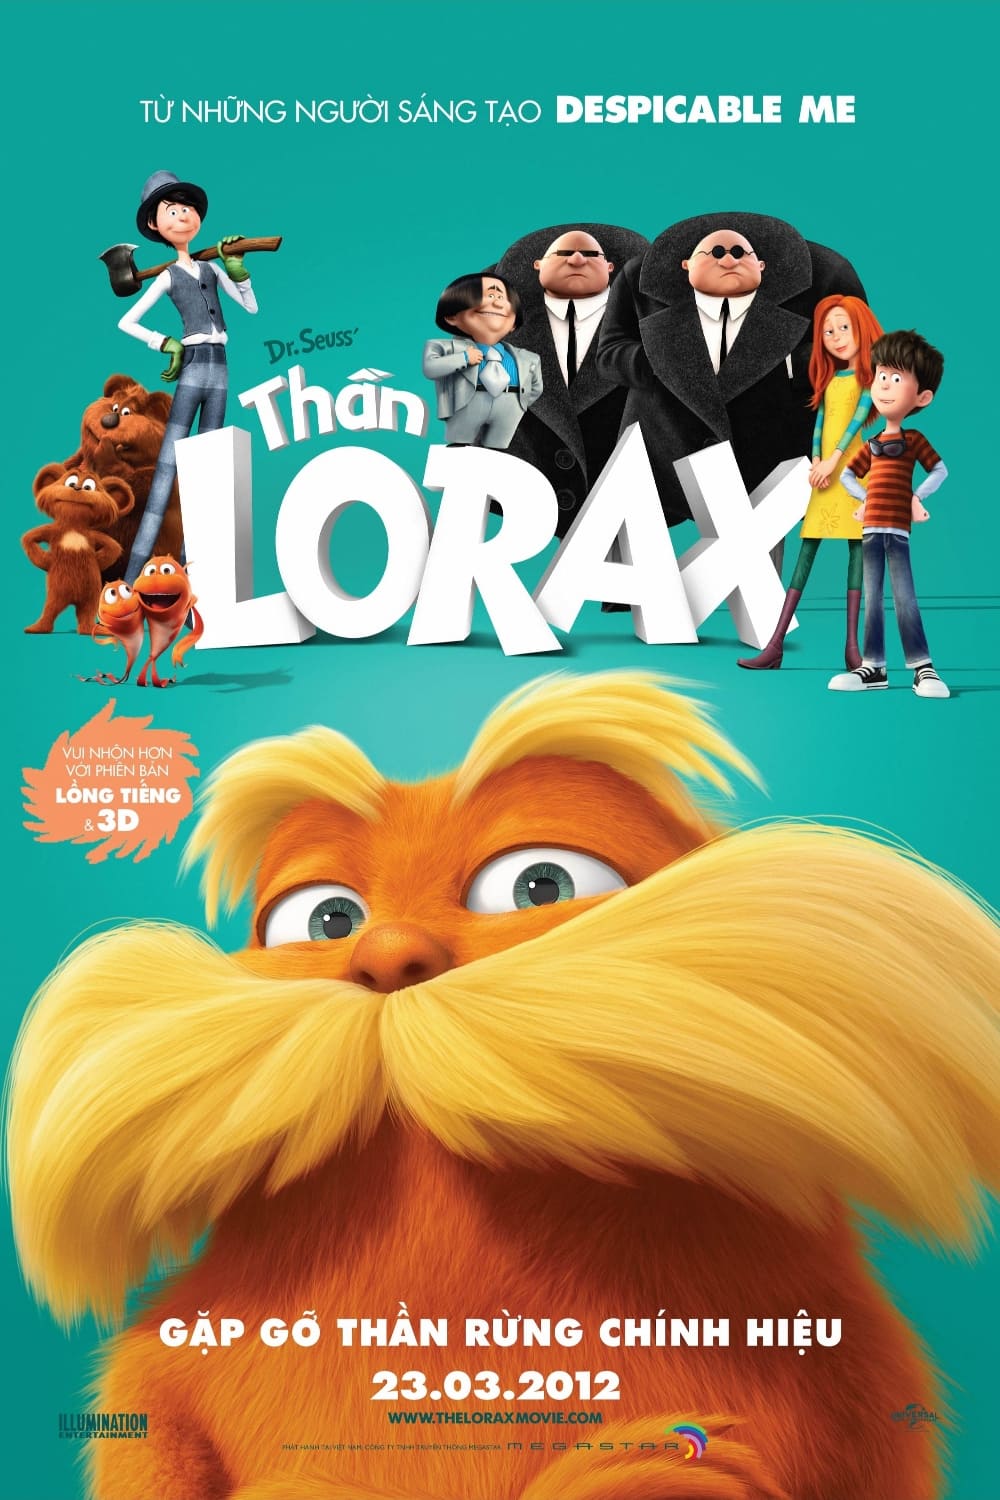 Thần Lorax (Dr. Seuss The Lorax) [2012]